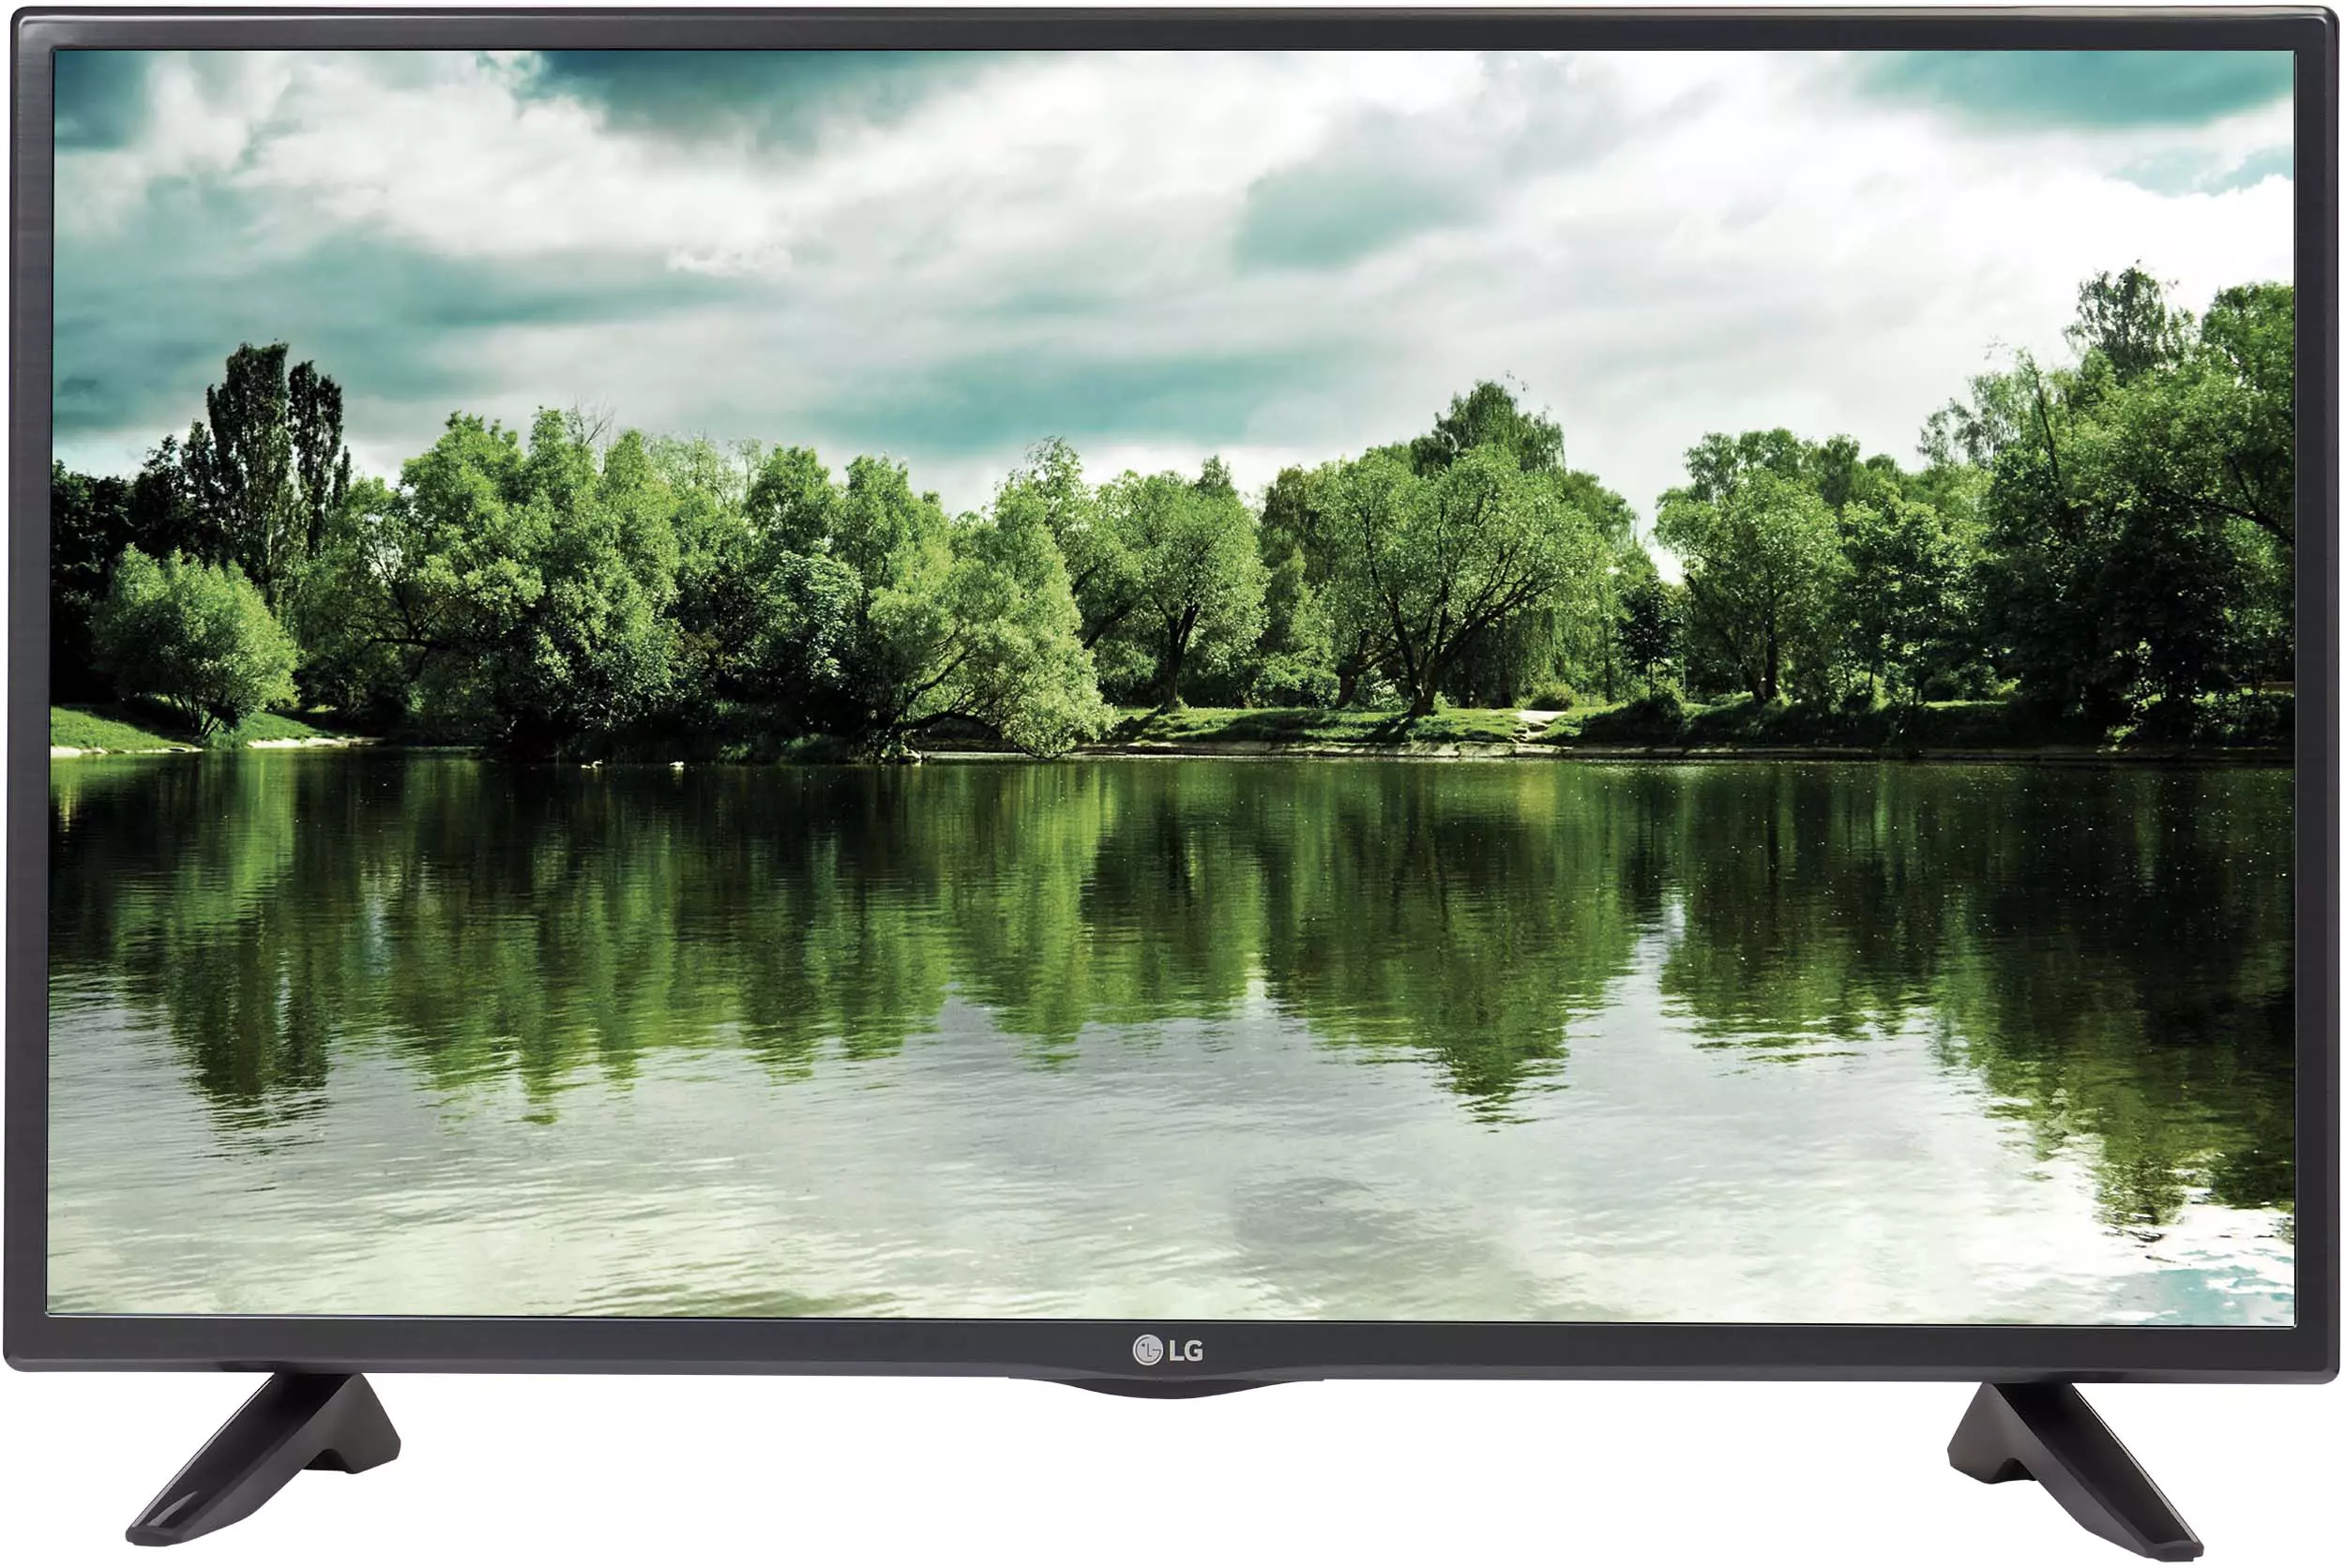 Купить телевизор lg 28. Led телевизор LG 42lf551c. Телевизор LG 28lf551c 28" (2015).